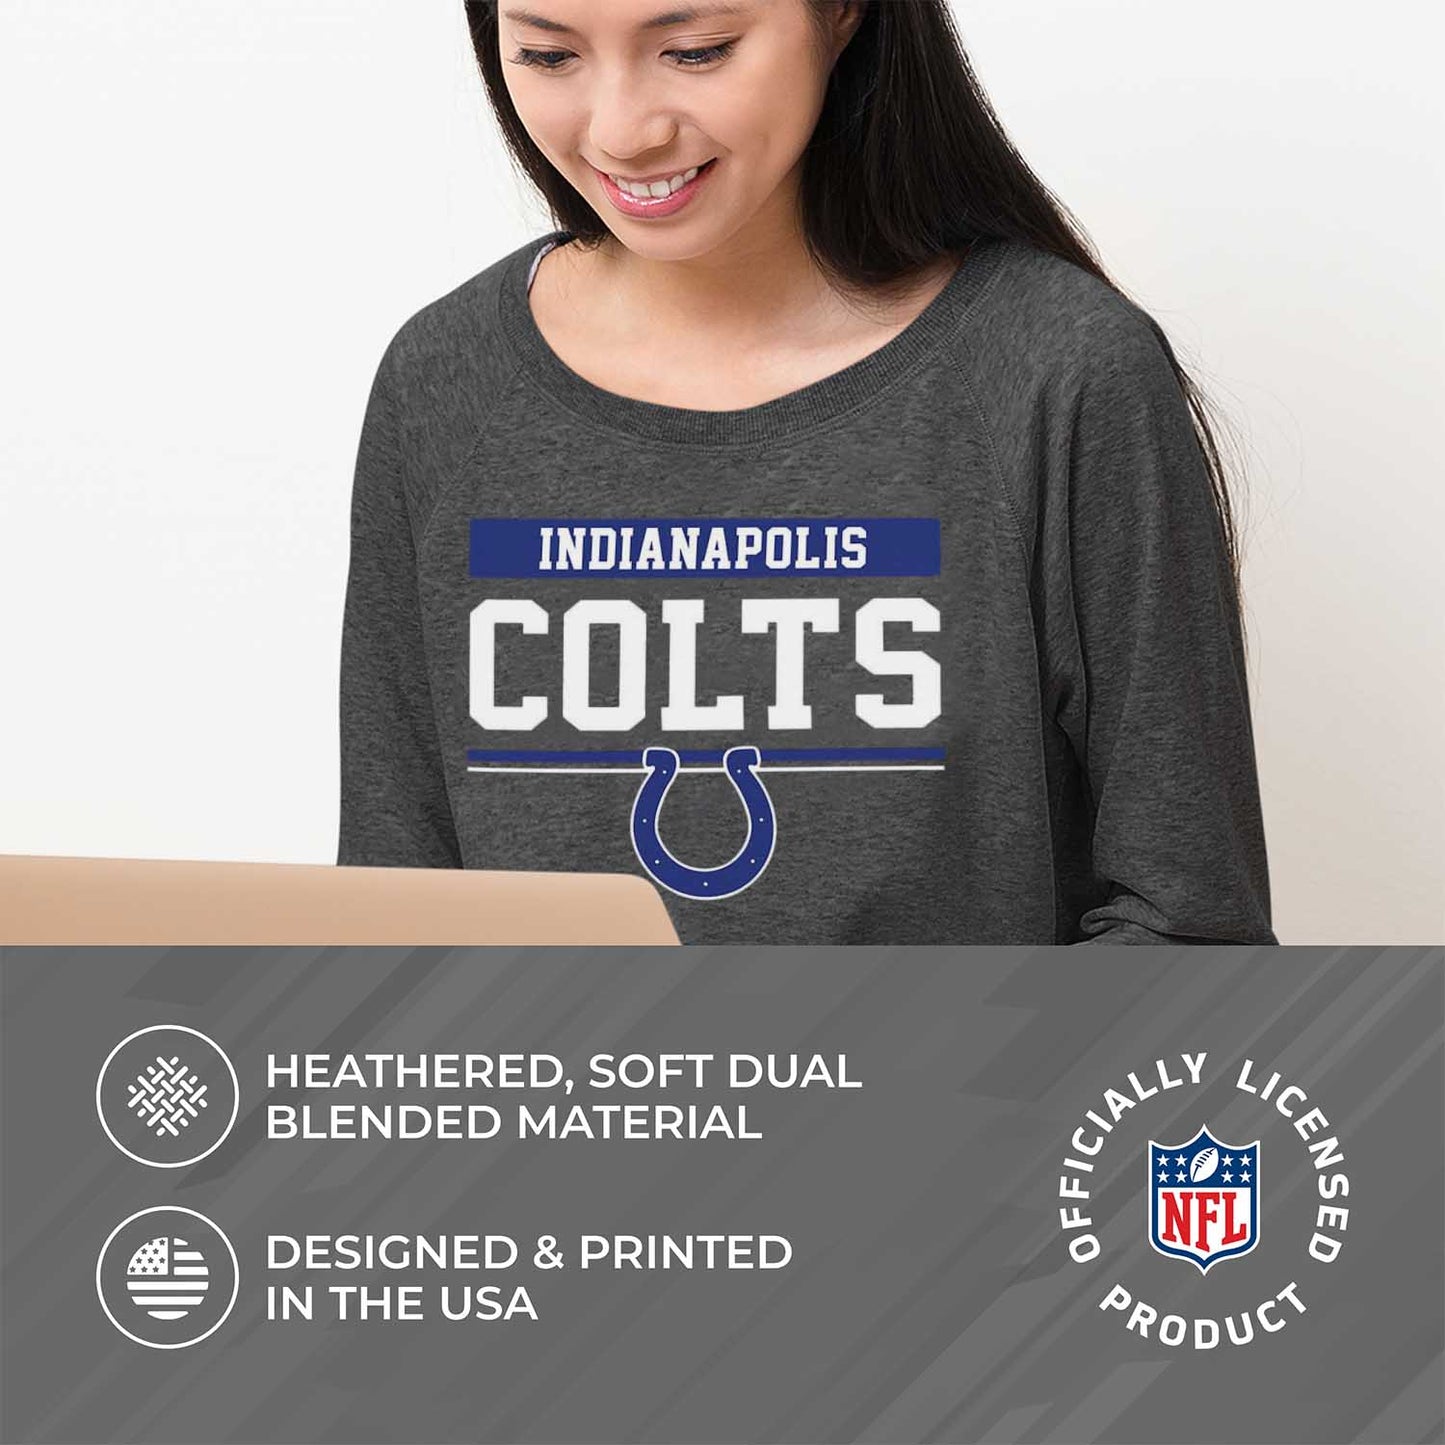 Indianapolis Colts NFL Women's Plus Size Team Block Charcoal Crewneck - Charcoal